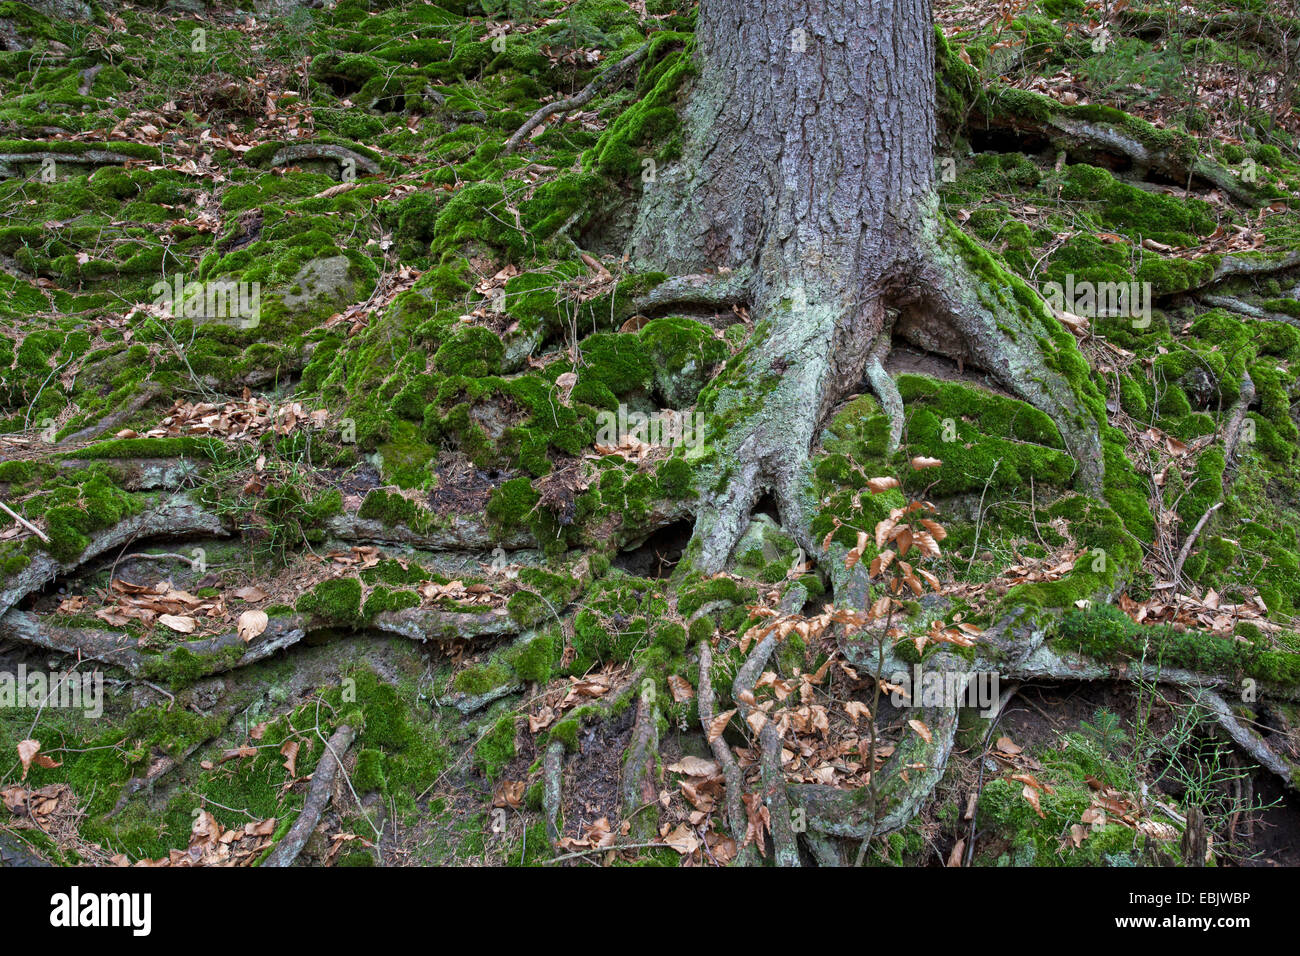 Norway spruce (Picea abies), tree roots, Germany, Saxony, Saxon Switzerland National Park, Elbsandsteingebirge Stock Photo